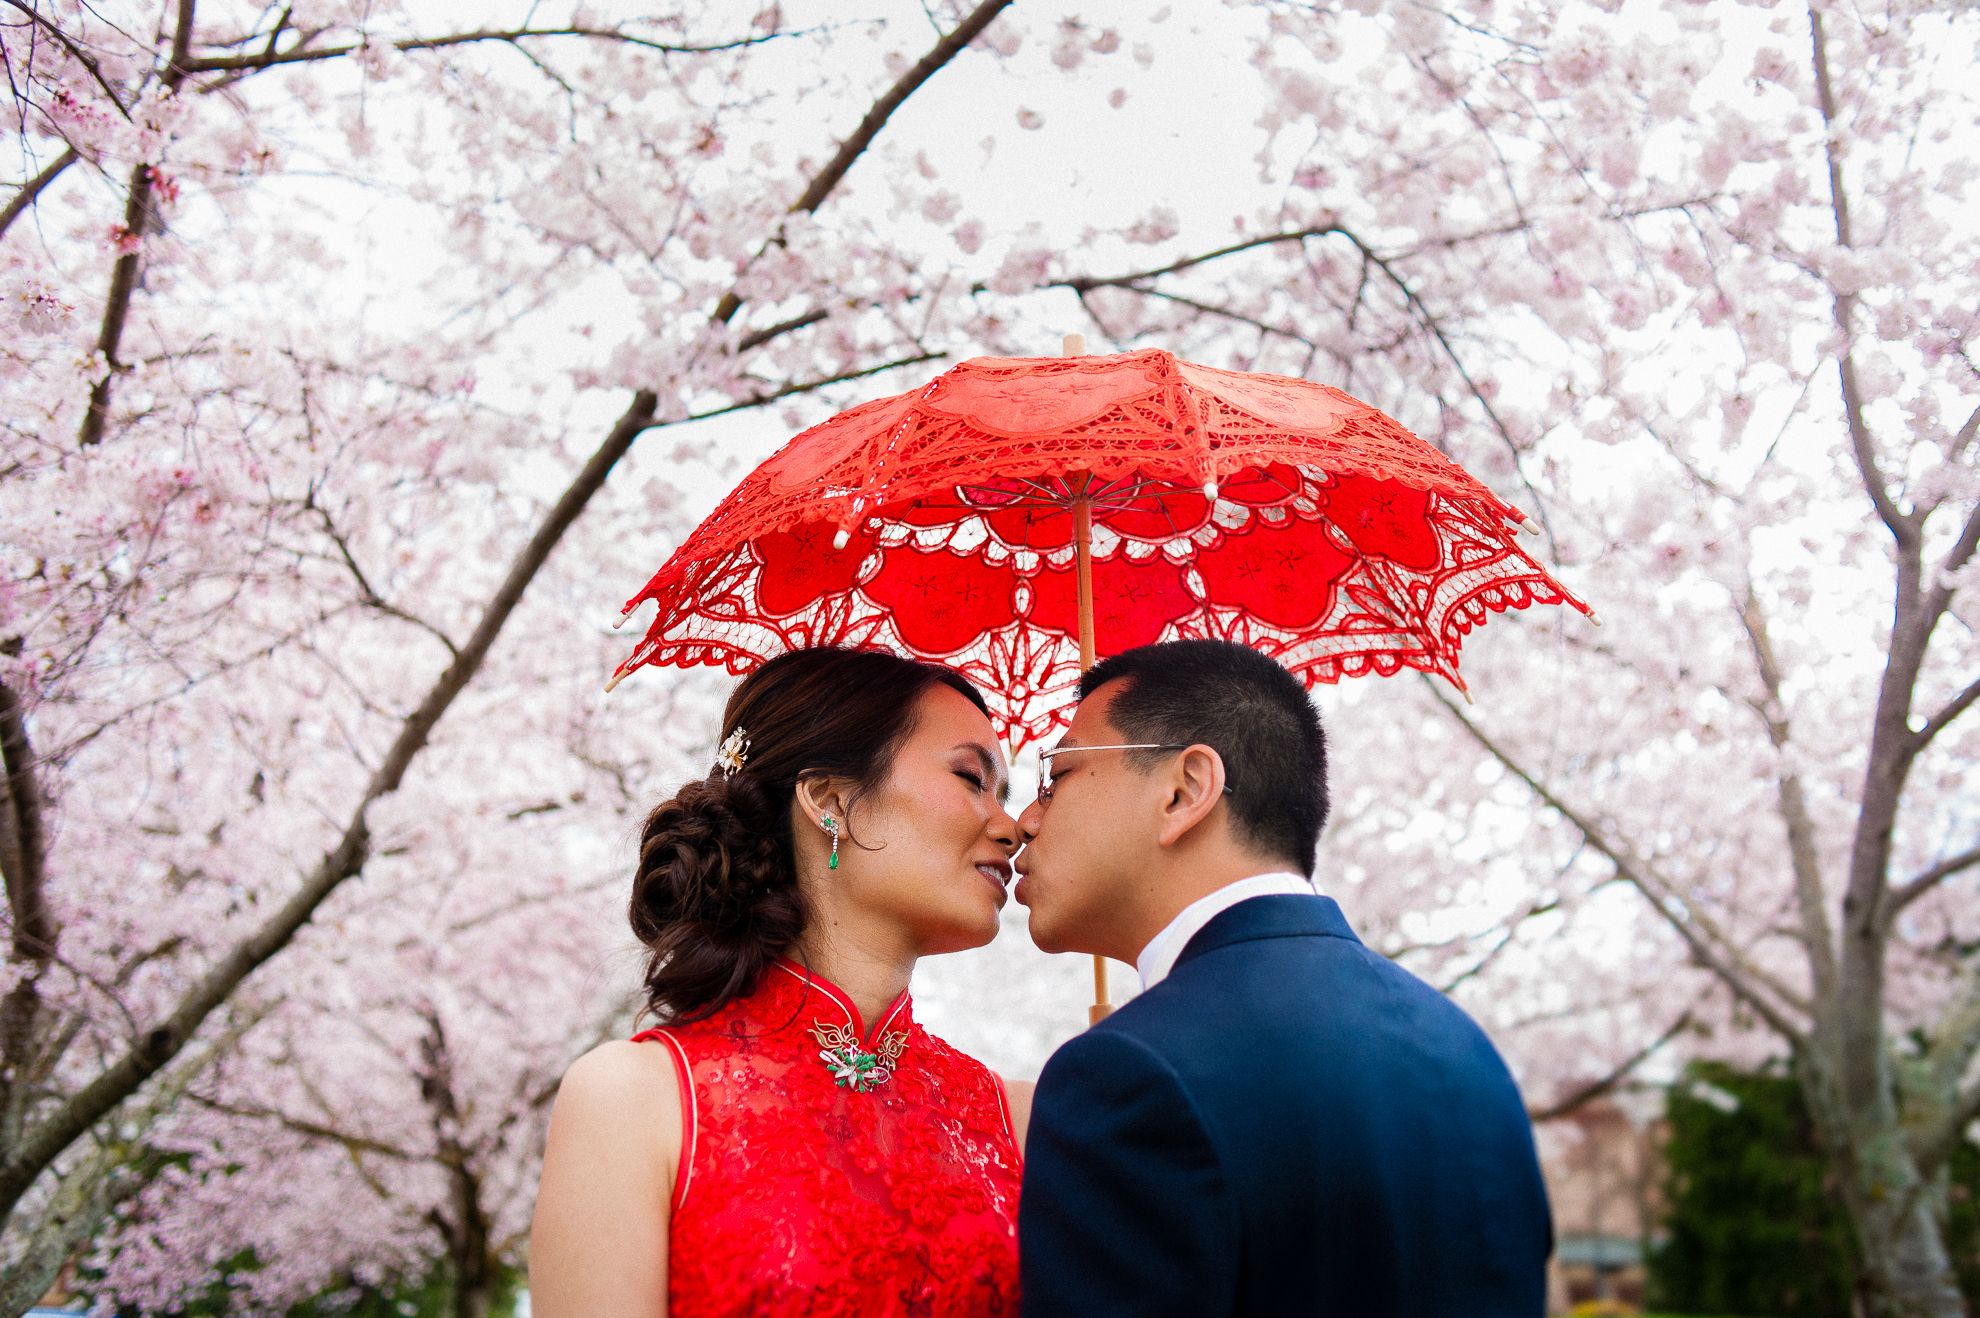 chinese wedding portrait under cherry trees